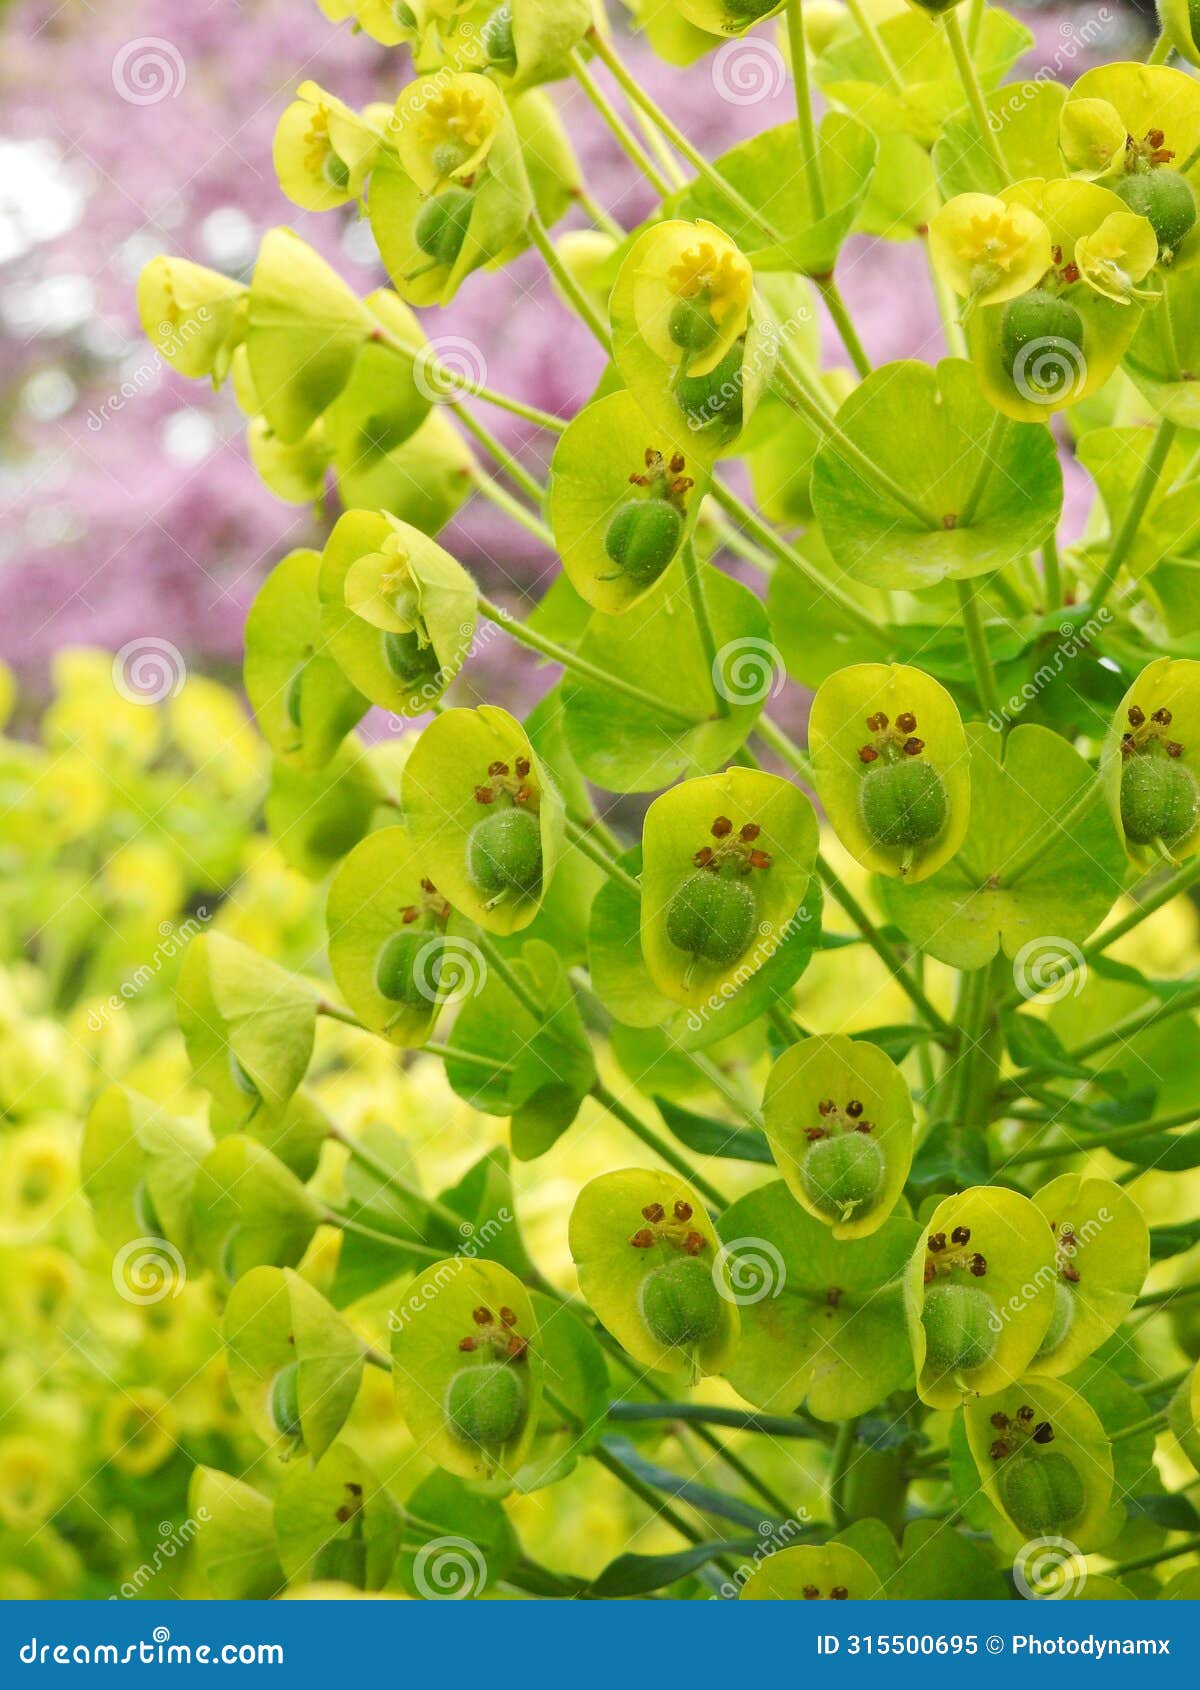 euphorbia spurge flowering plant green border plants background summer